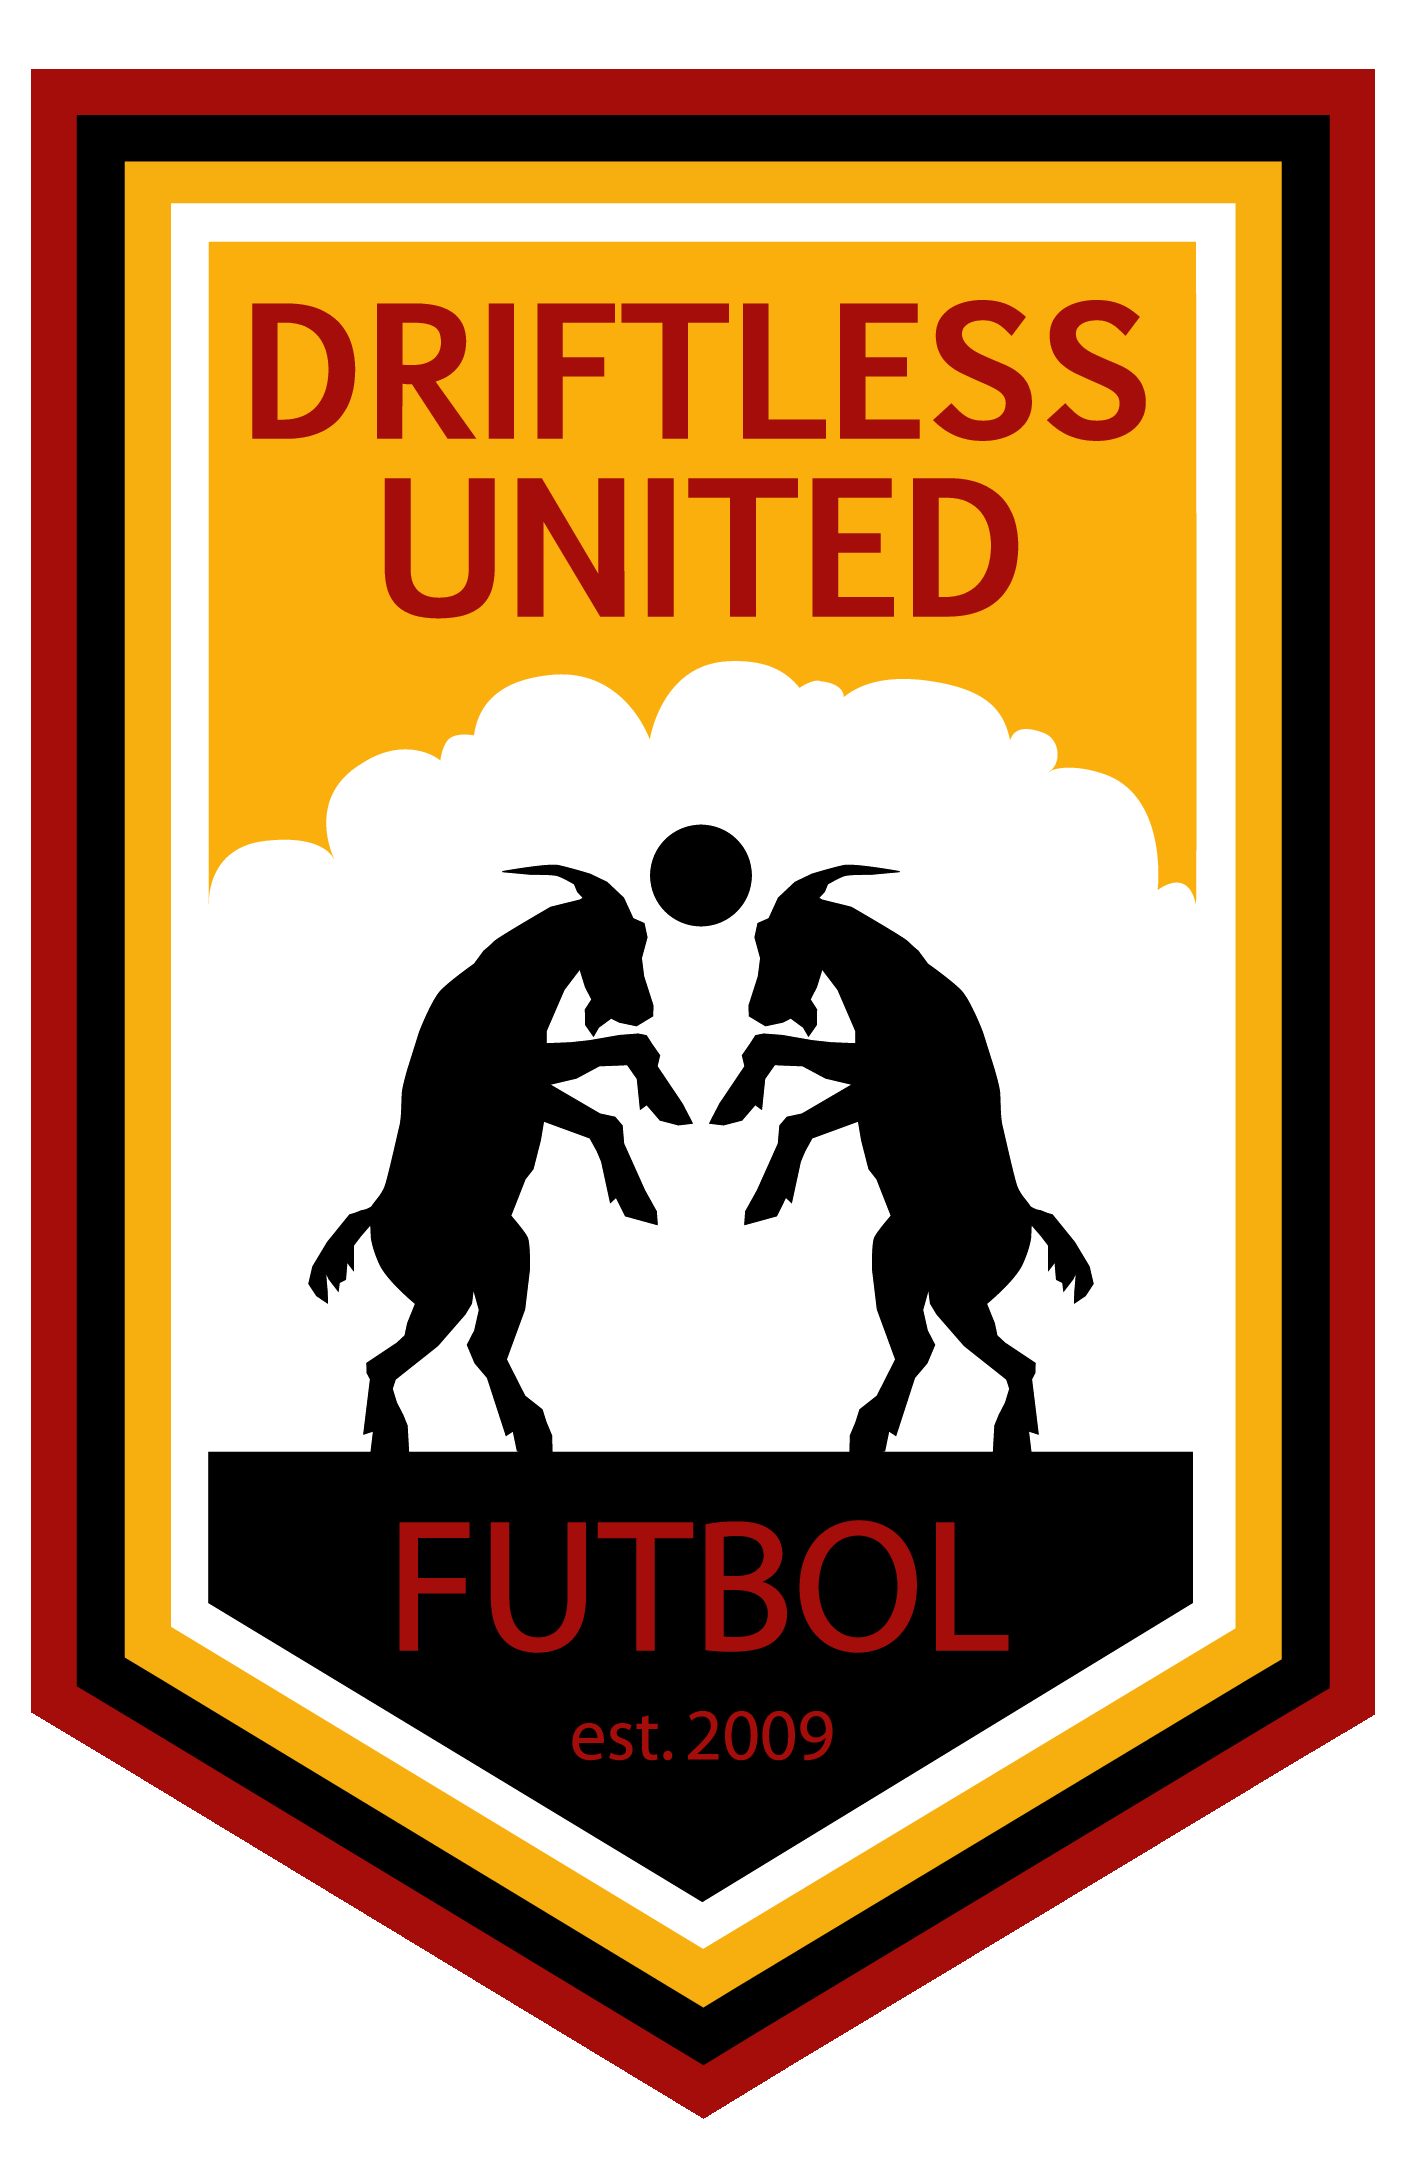 Driftless United Futbol